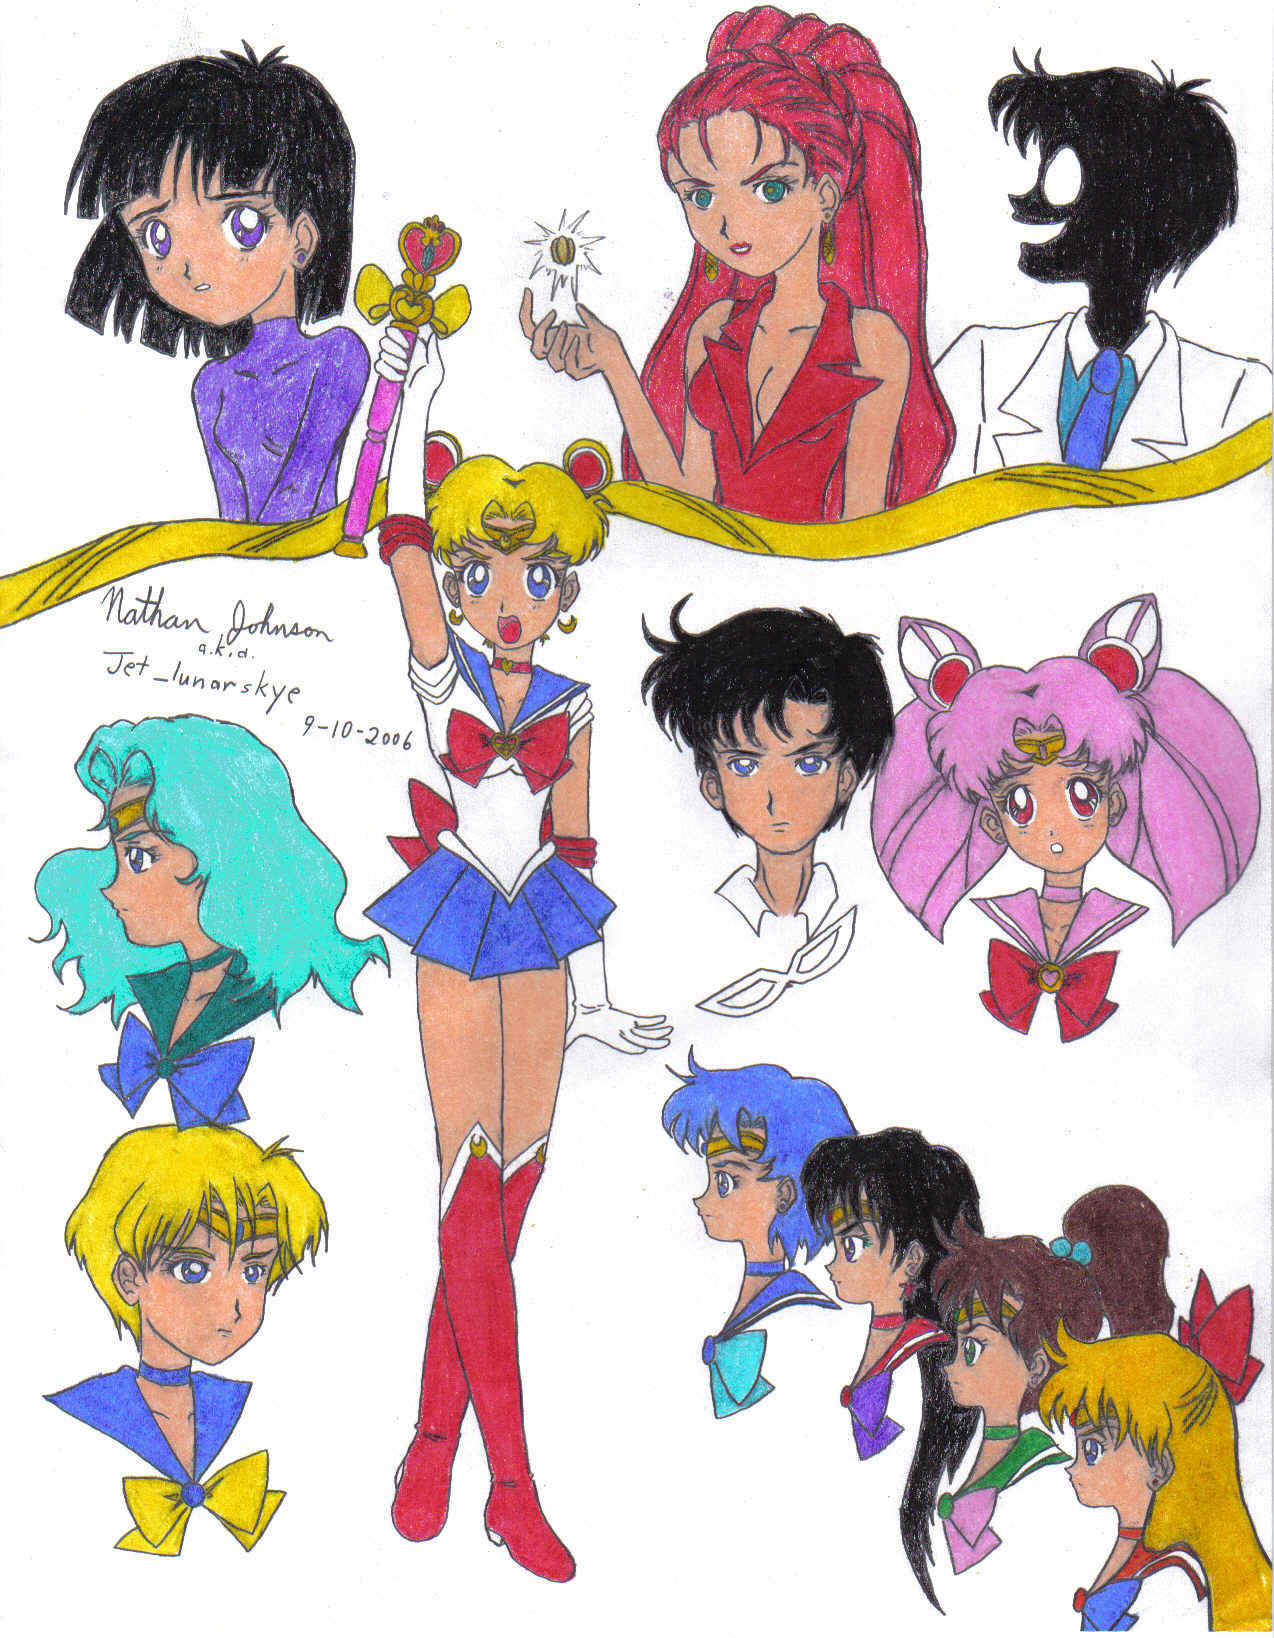 Sailor Moon S Series by Jet_lunarskye